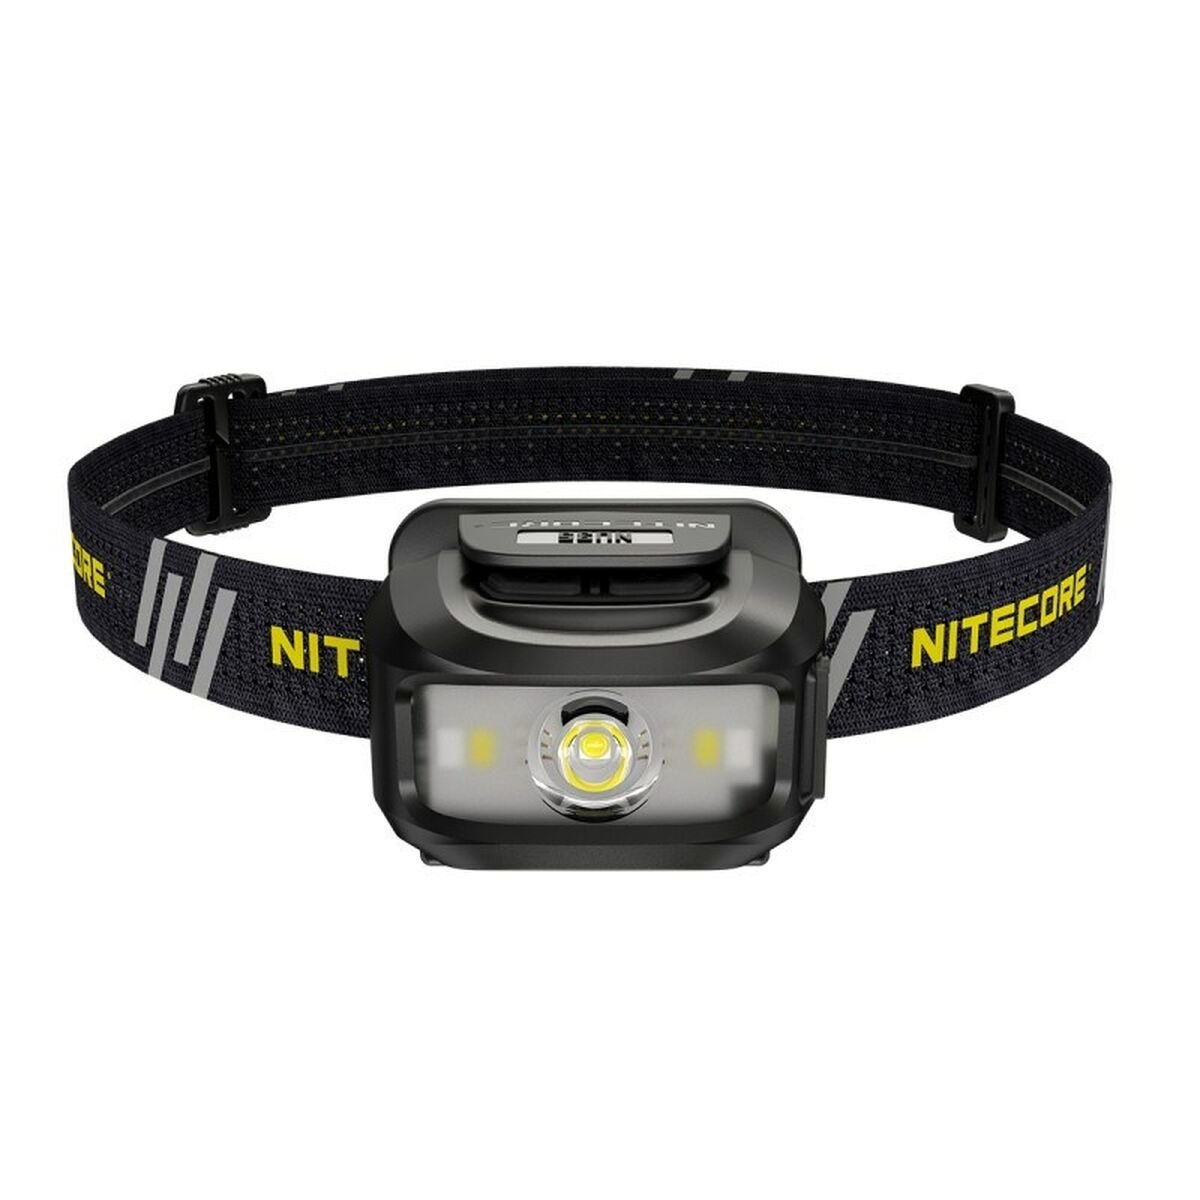 Lanterna LED para a Cabeça Nitecore NT-NU35 Preto 460 lm